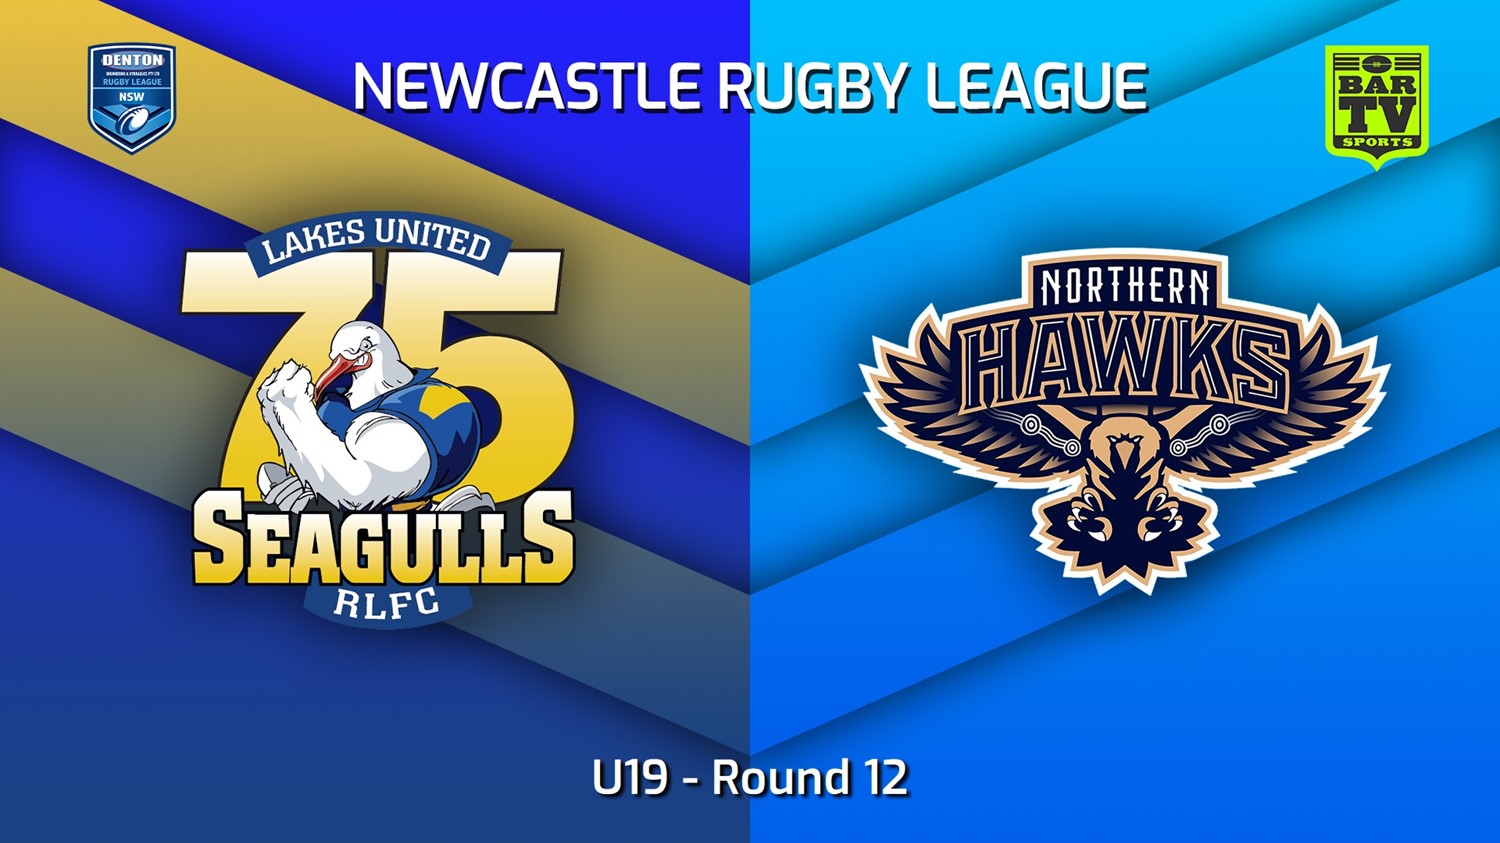 220619-Newcastle Round 12 - U19 - Lakes United v Northern Hawks Slate Image